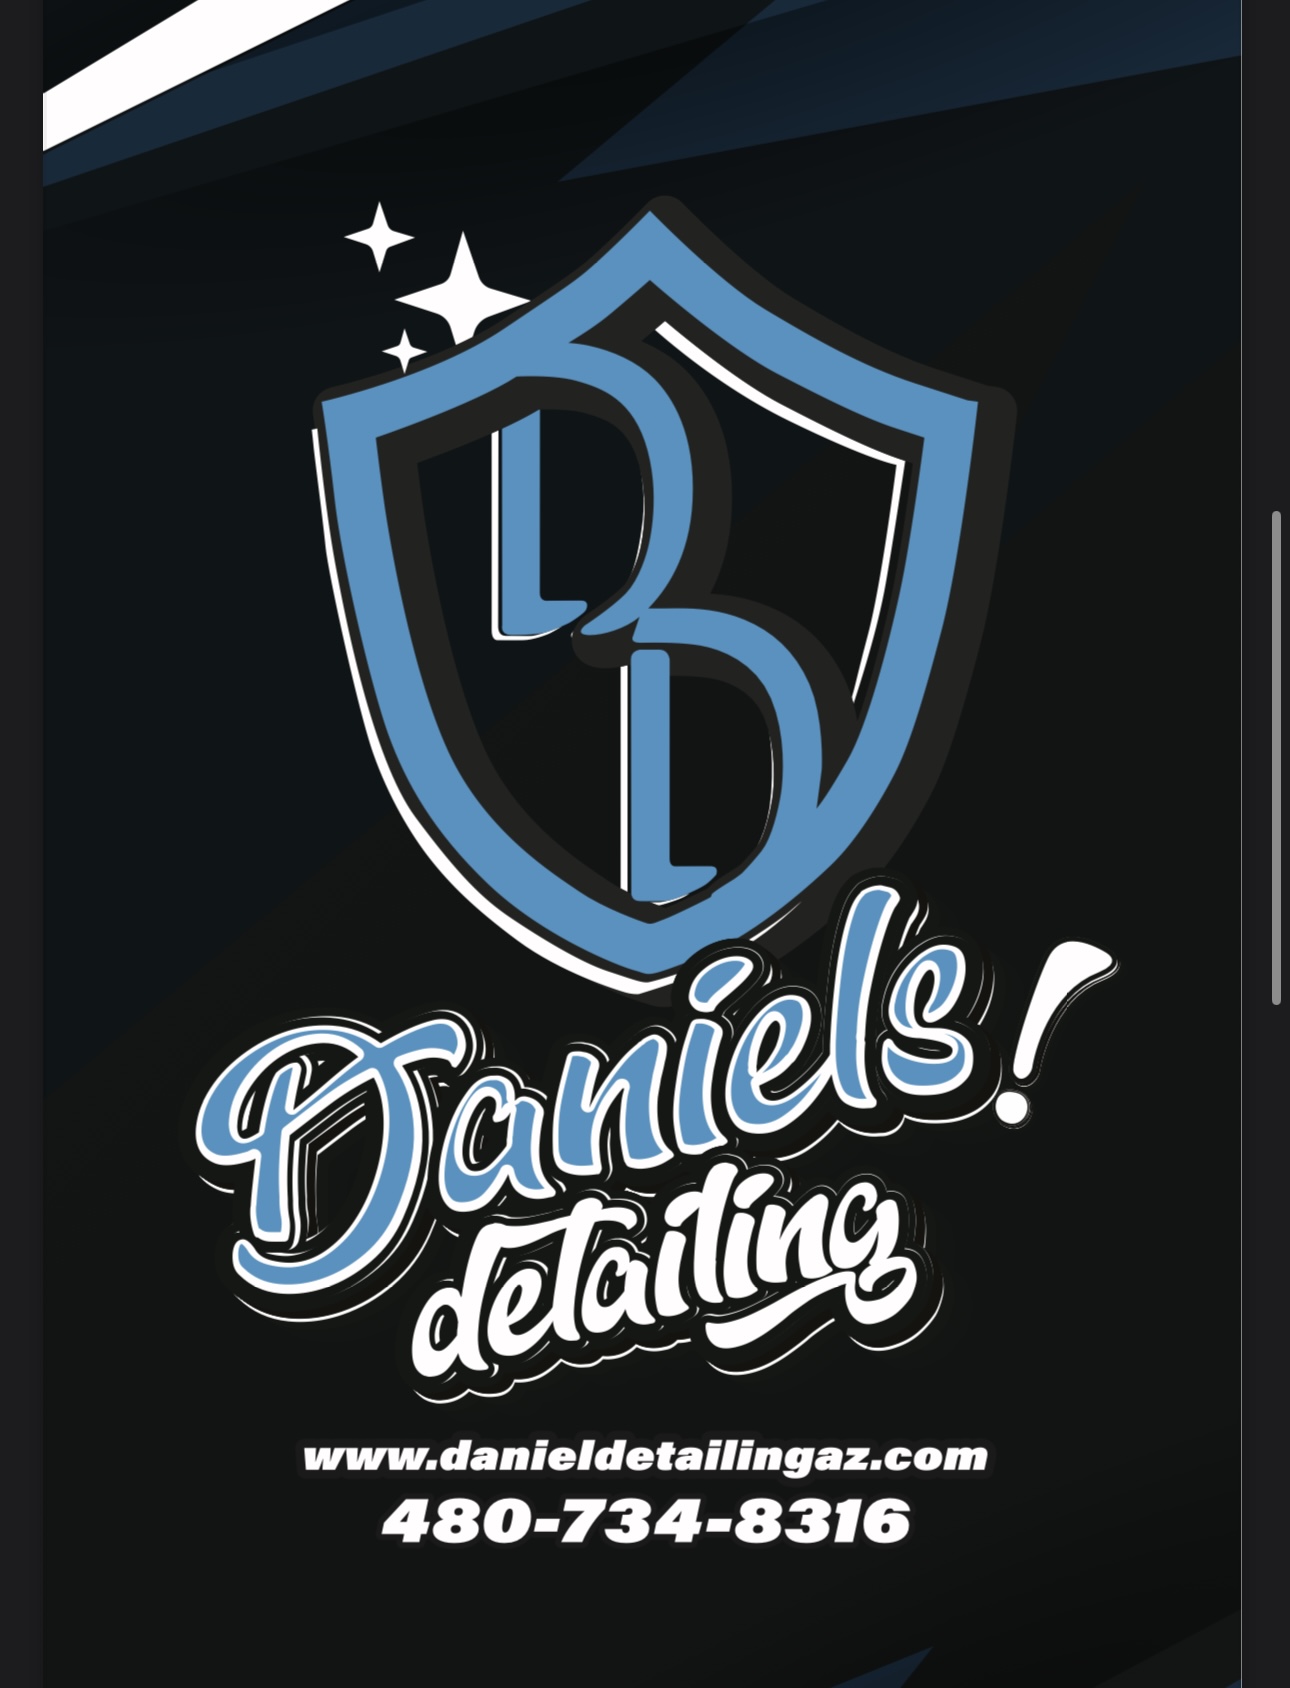 Daniel’s Mobile Detailing & Ceramic Coating